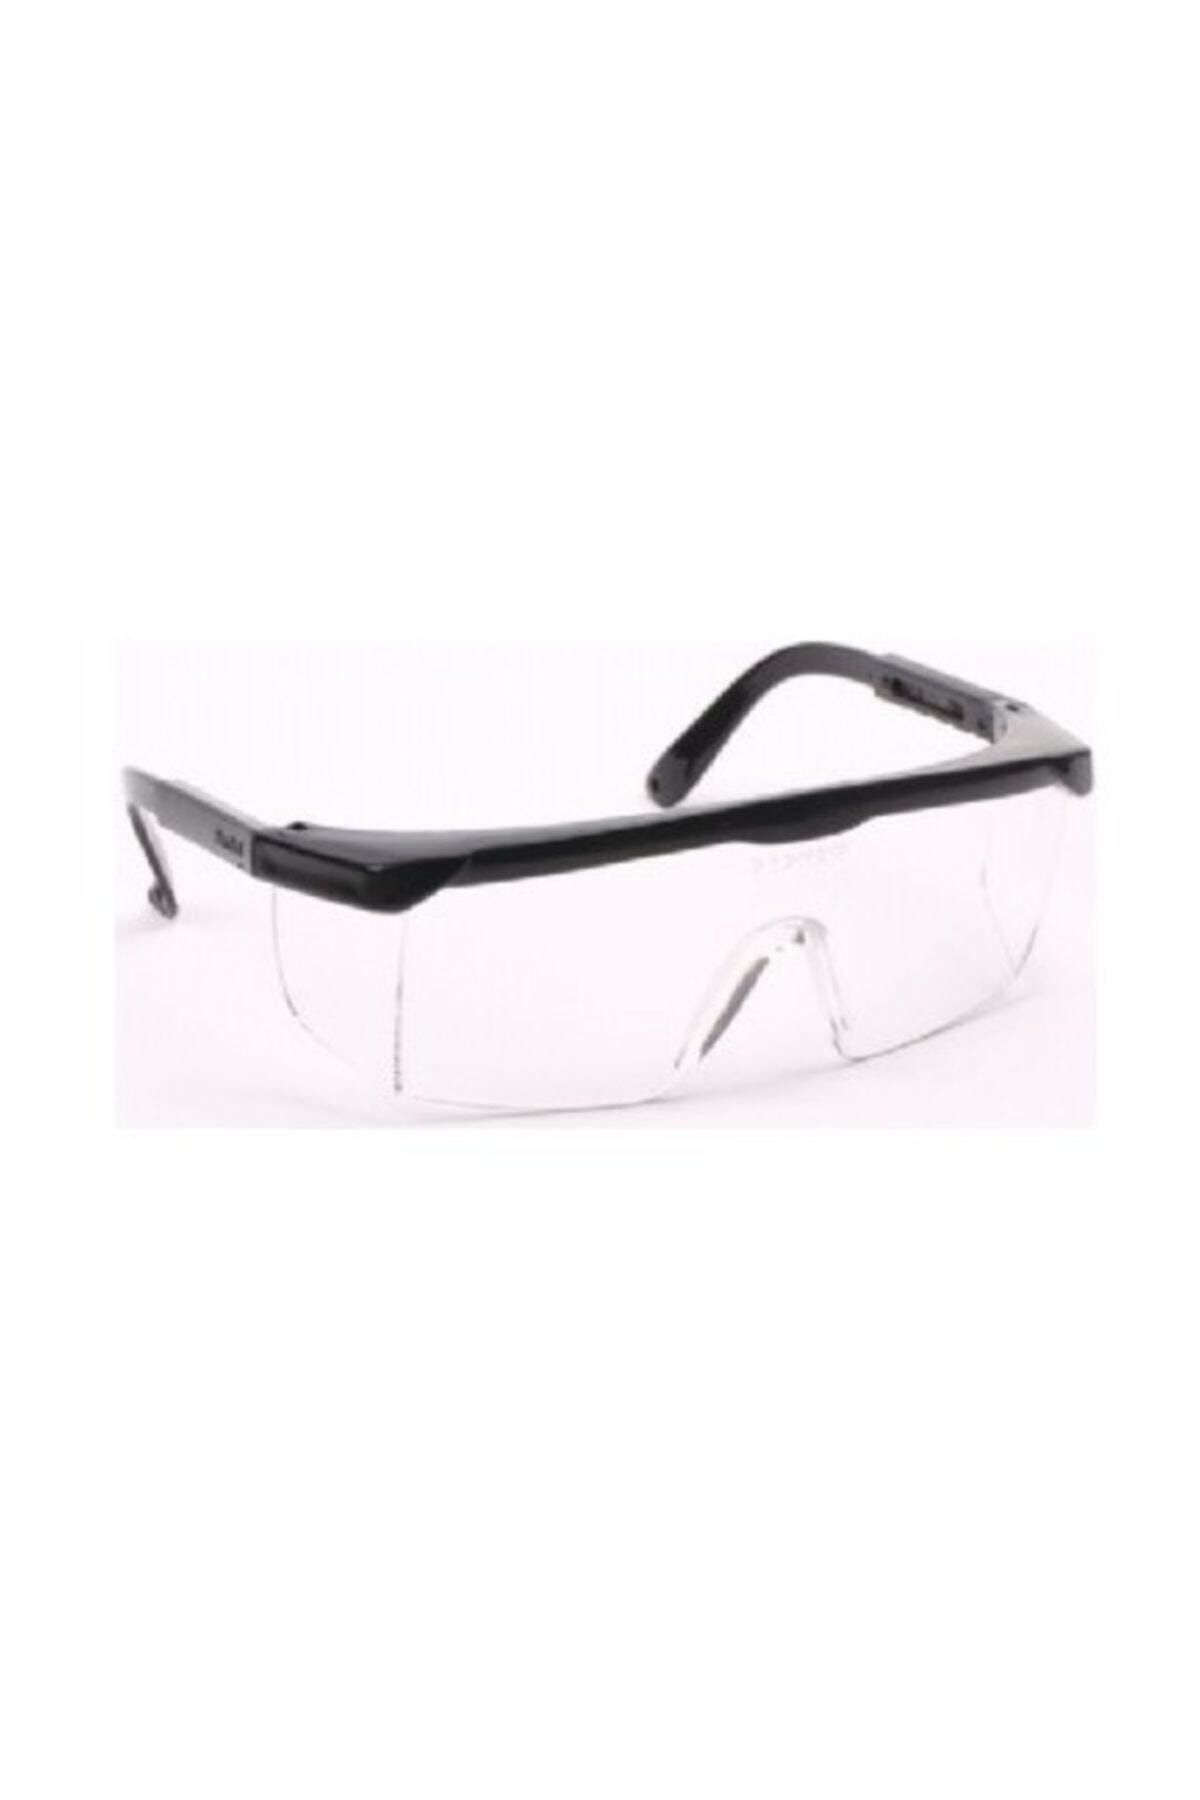 3M Baymax Çapak Gözlüğü Şeffaf